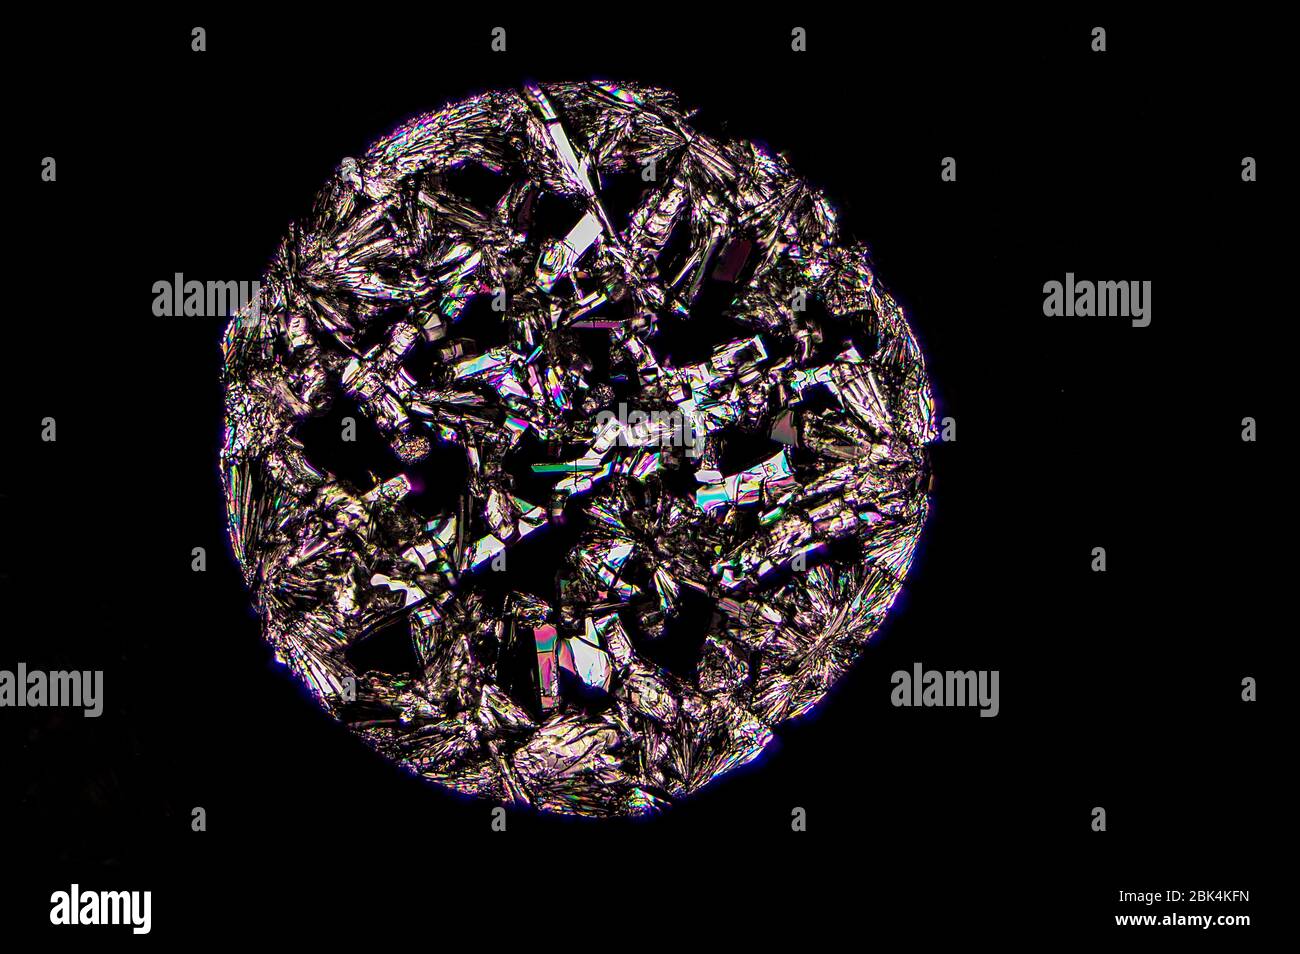 Cristal de vitamina C visto bajo microscopía de luz polarizada Foto de stock